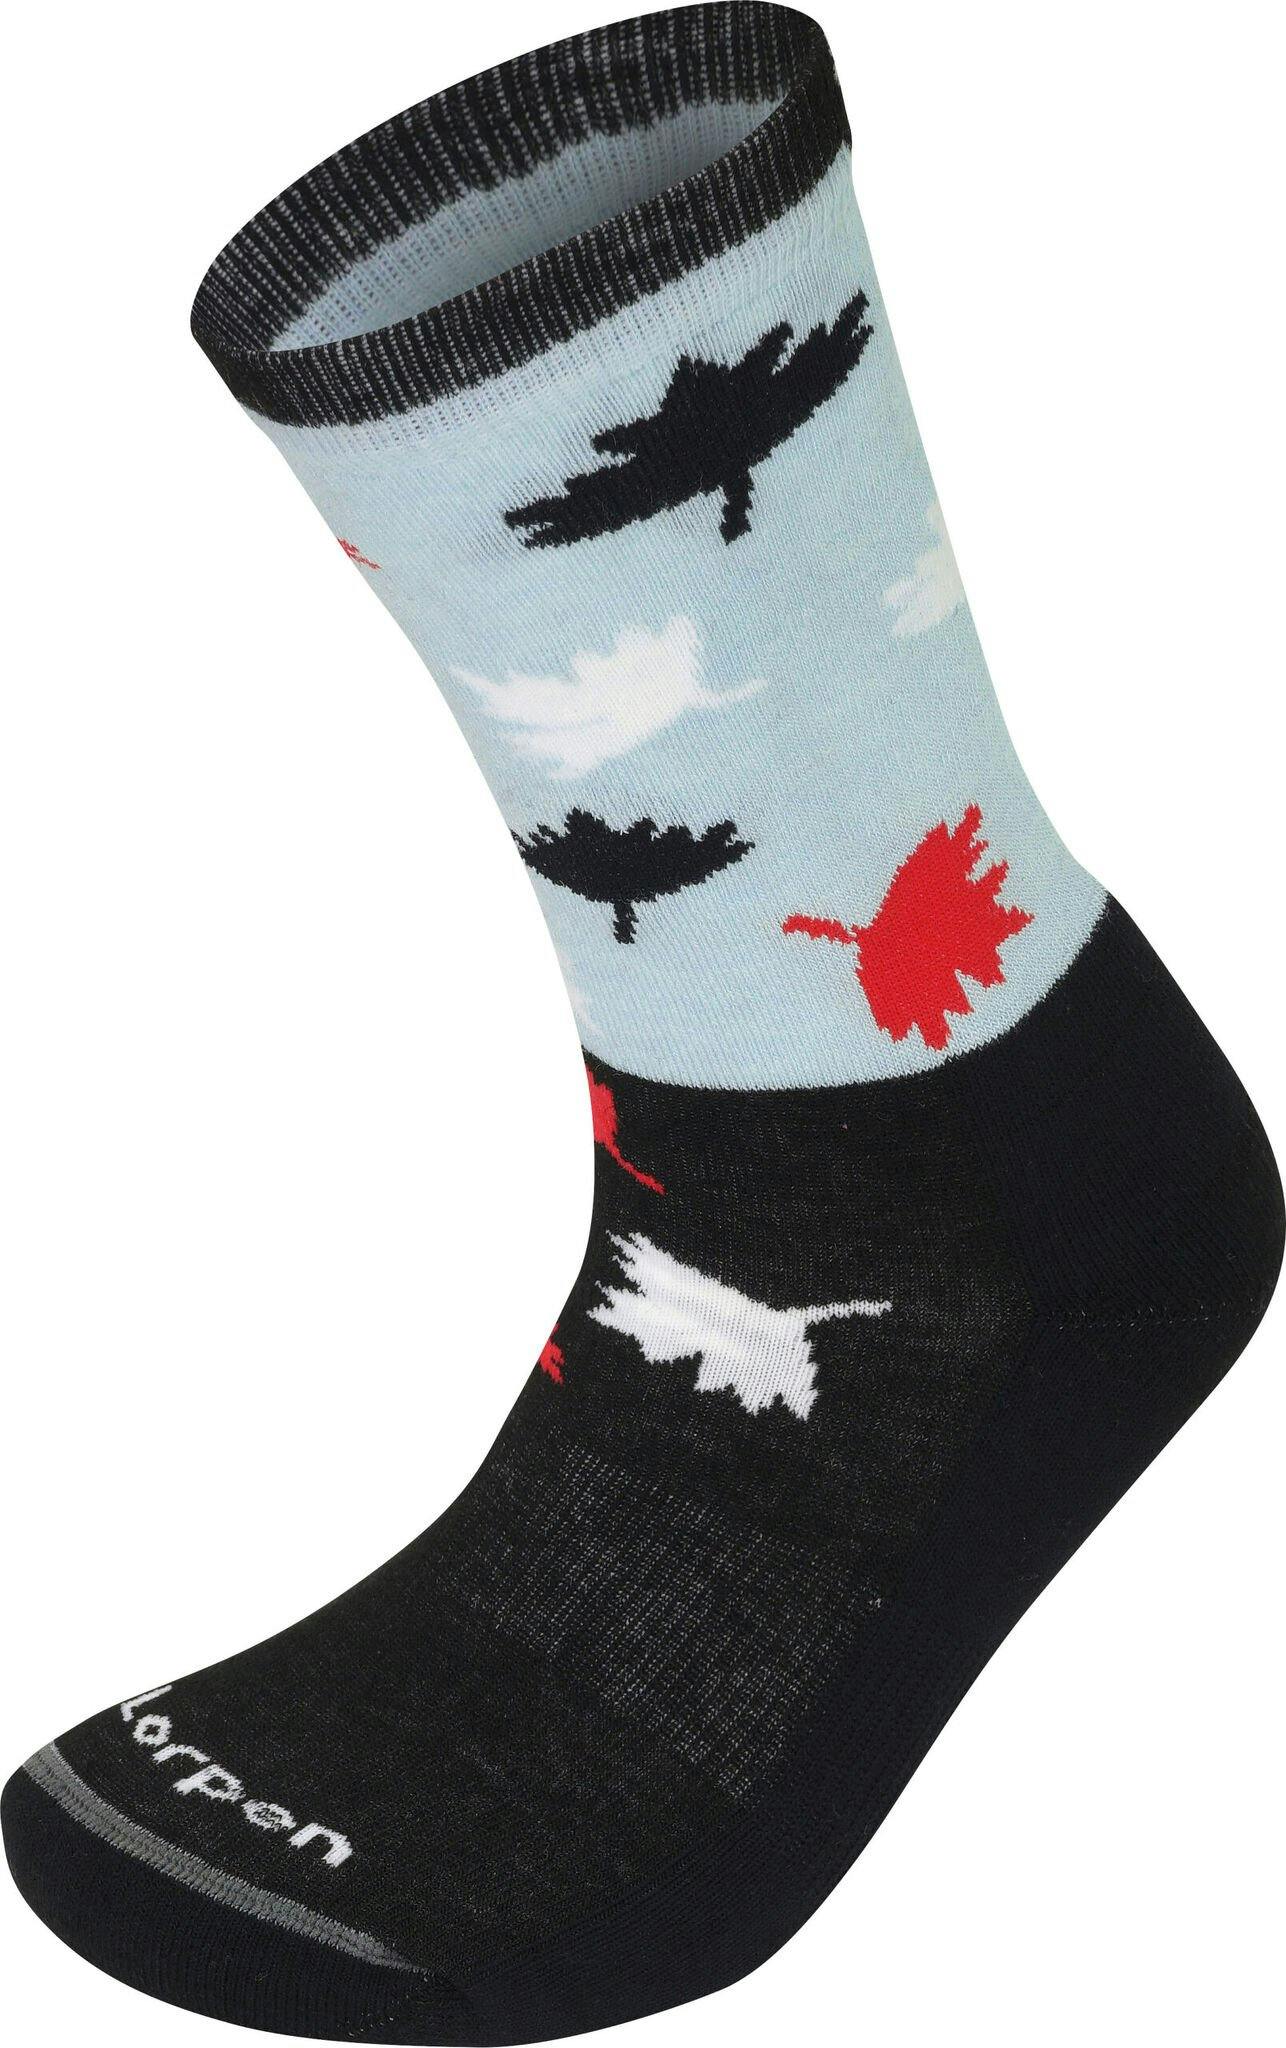 Product gallery image number 1 for product Merino Light Hiker Socks - Men's